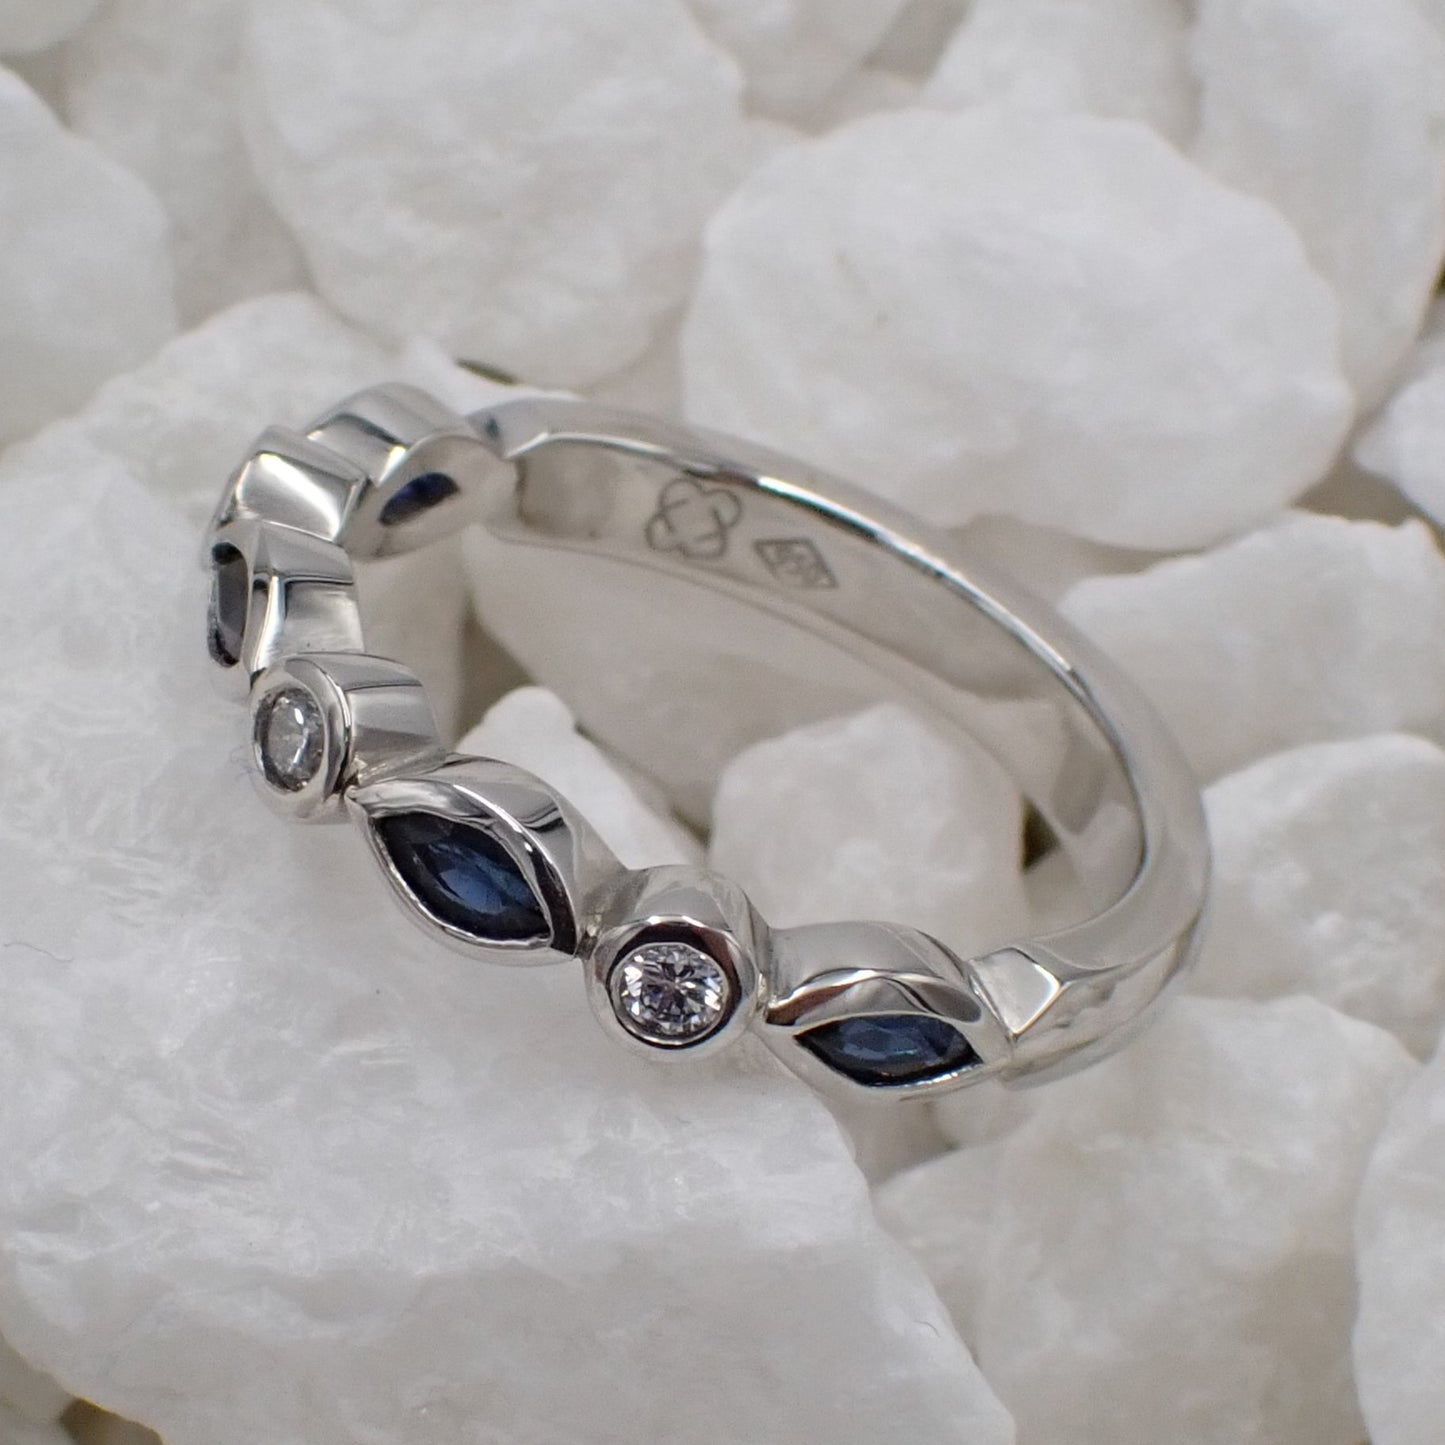 Sapphire and Diamond Wedding Ring - Marquise Sapphire